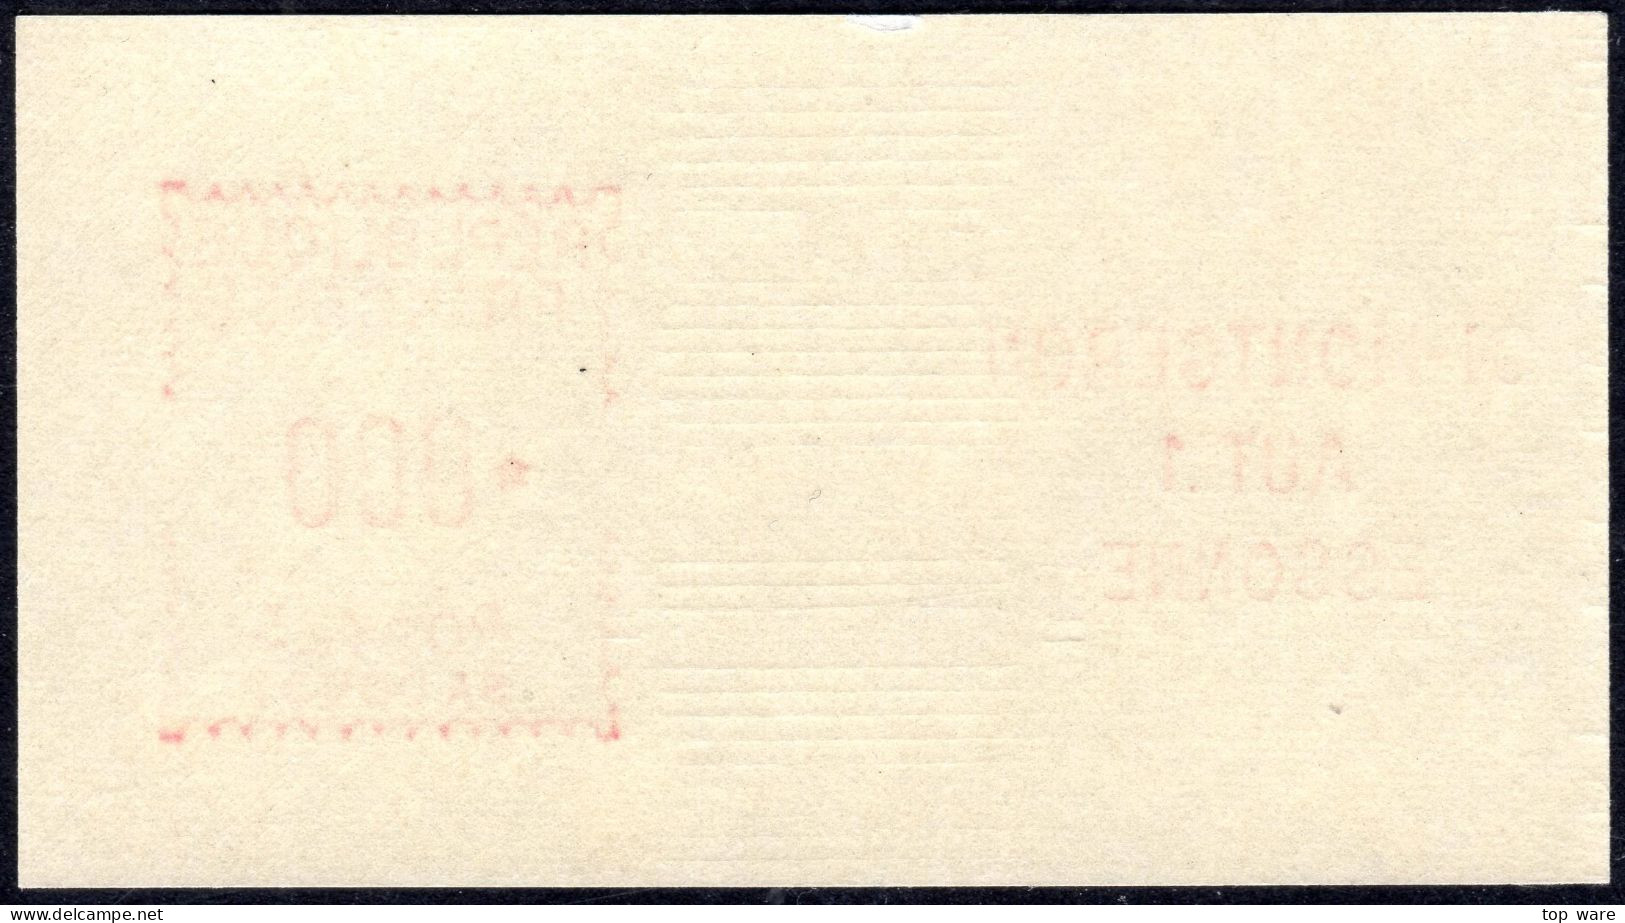 France MONTGERON ATM 2.2 I / Test Stamp 000 MNH / LSA Distributeurs Automatenmarken Vending Machine Safaa-Satas - 1969 Montgeron – Weißes Papier – Frama/Satas